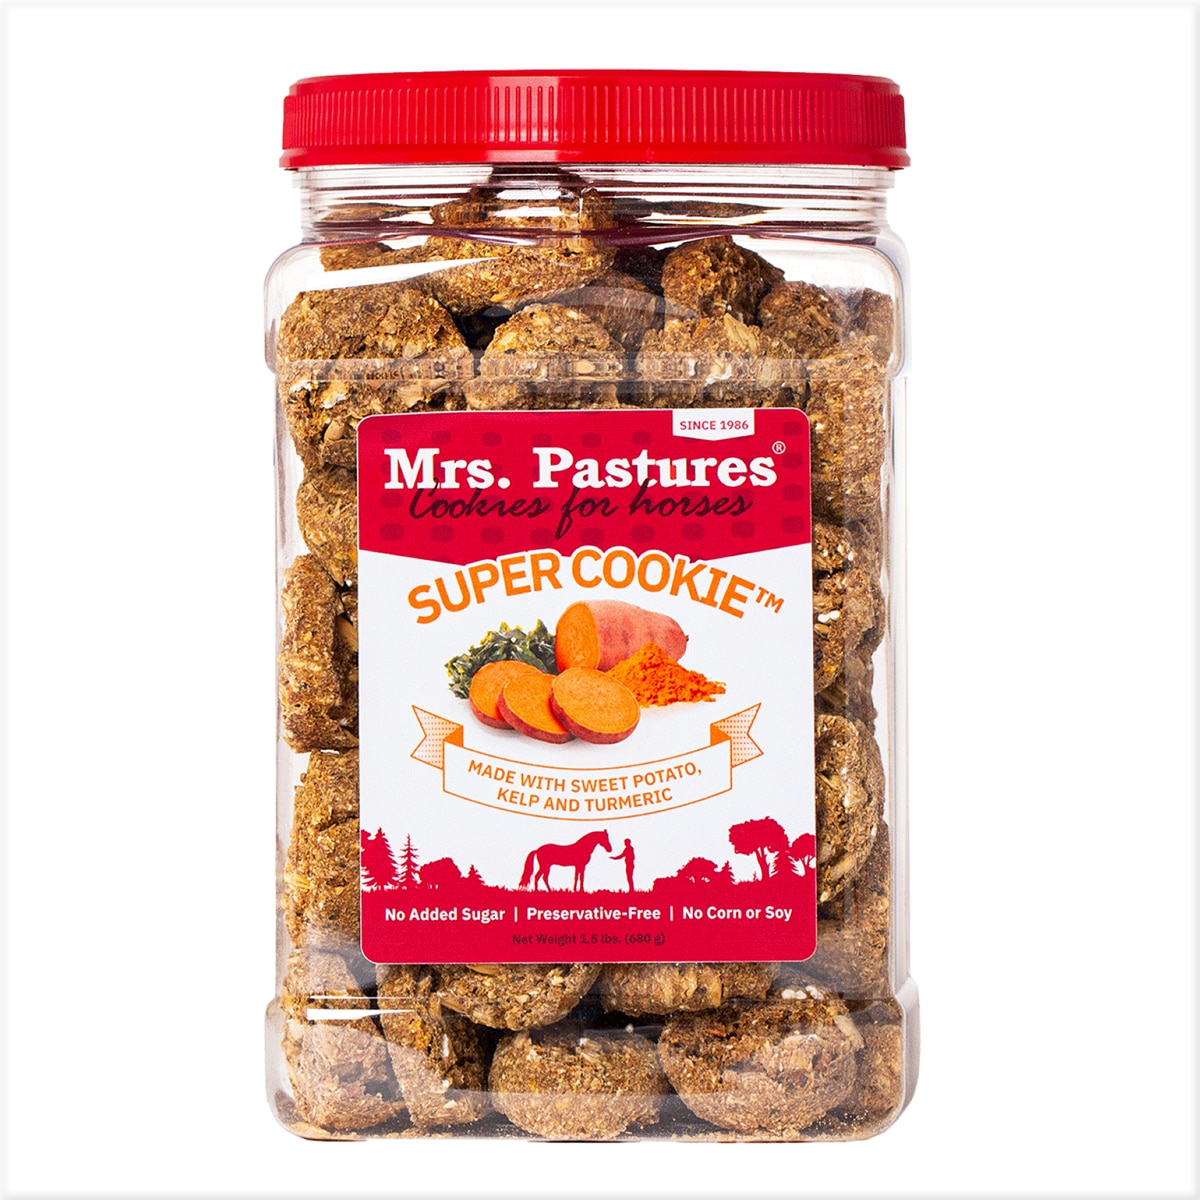 https://img.smartpak.com/images/product/highres/36319_mrspastures-sweetpotato-horse-cookies.jpg